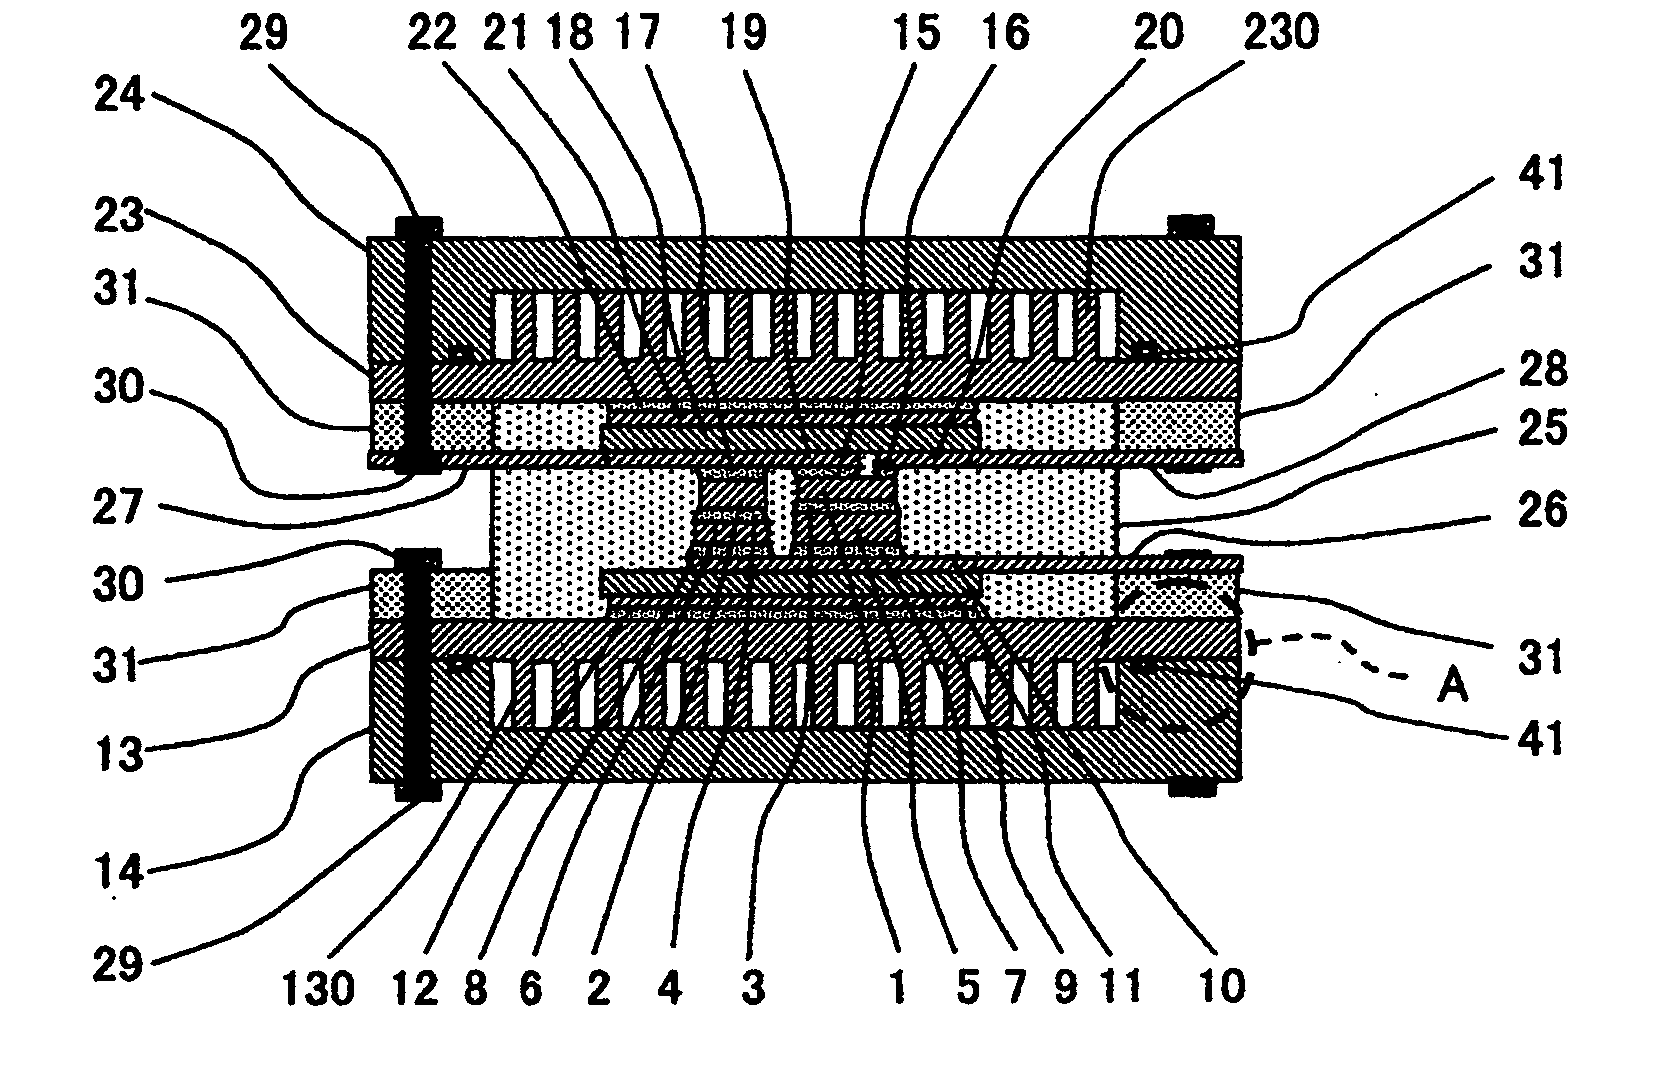 Power Semiconductor Module